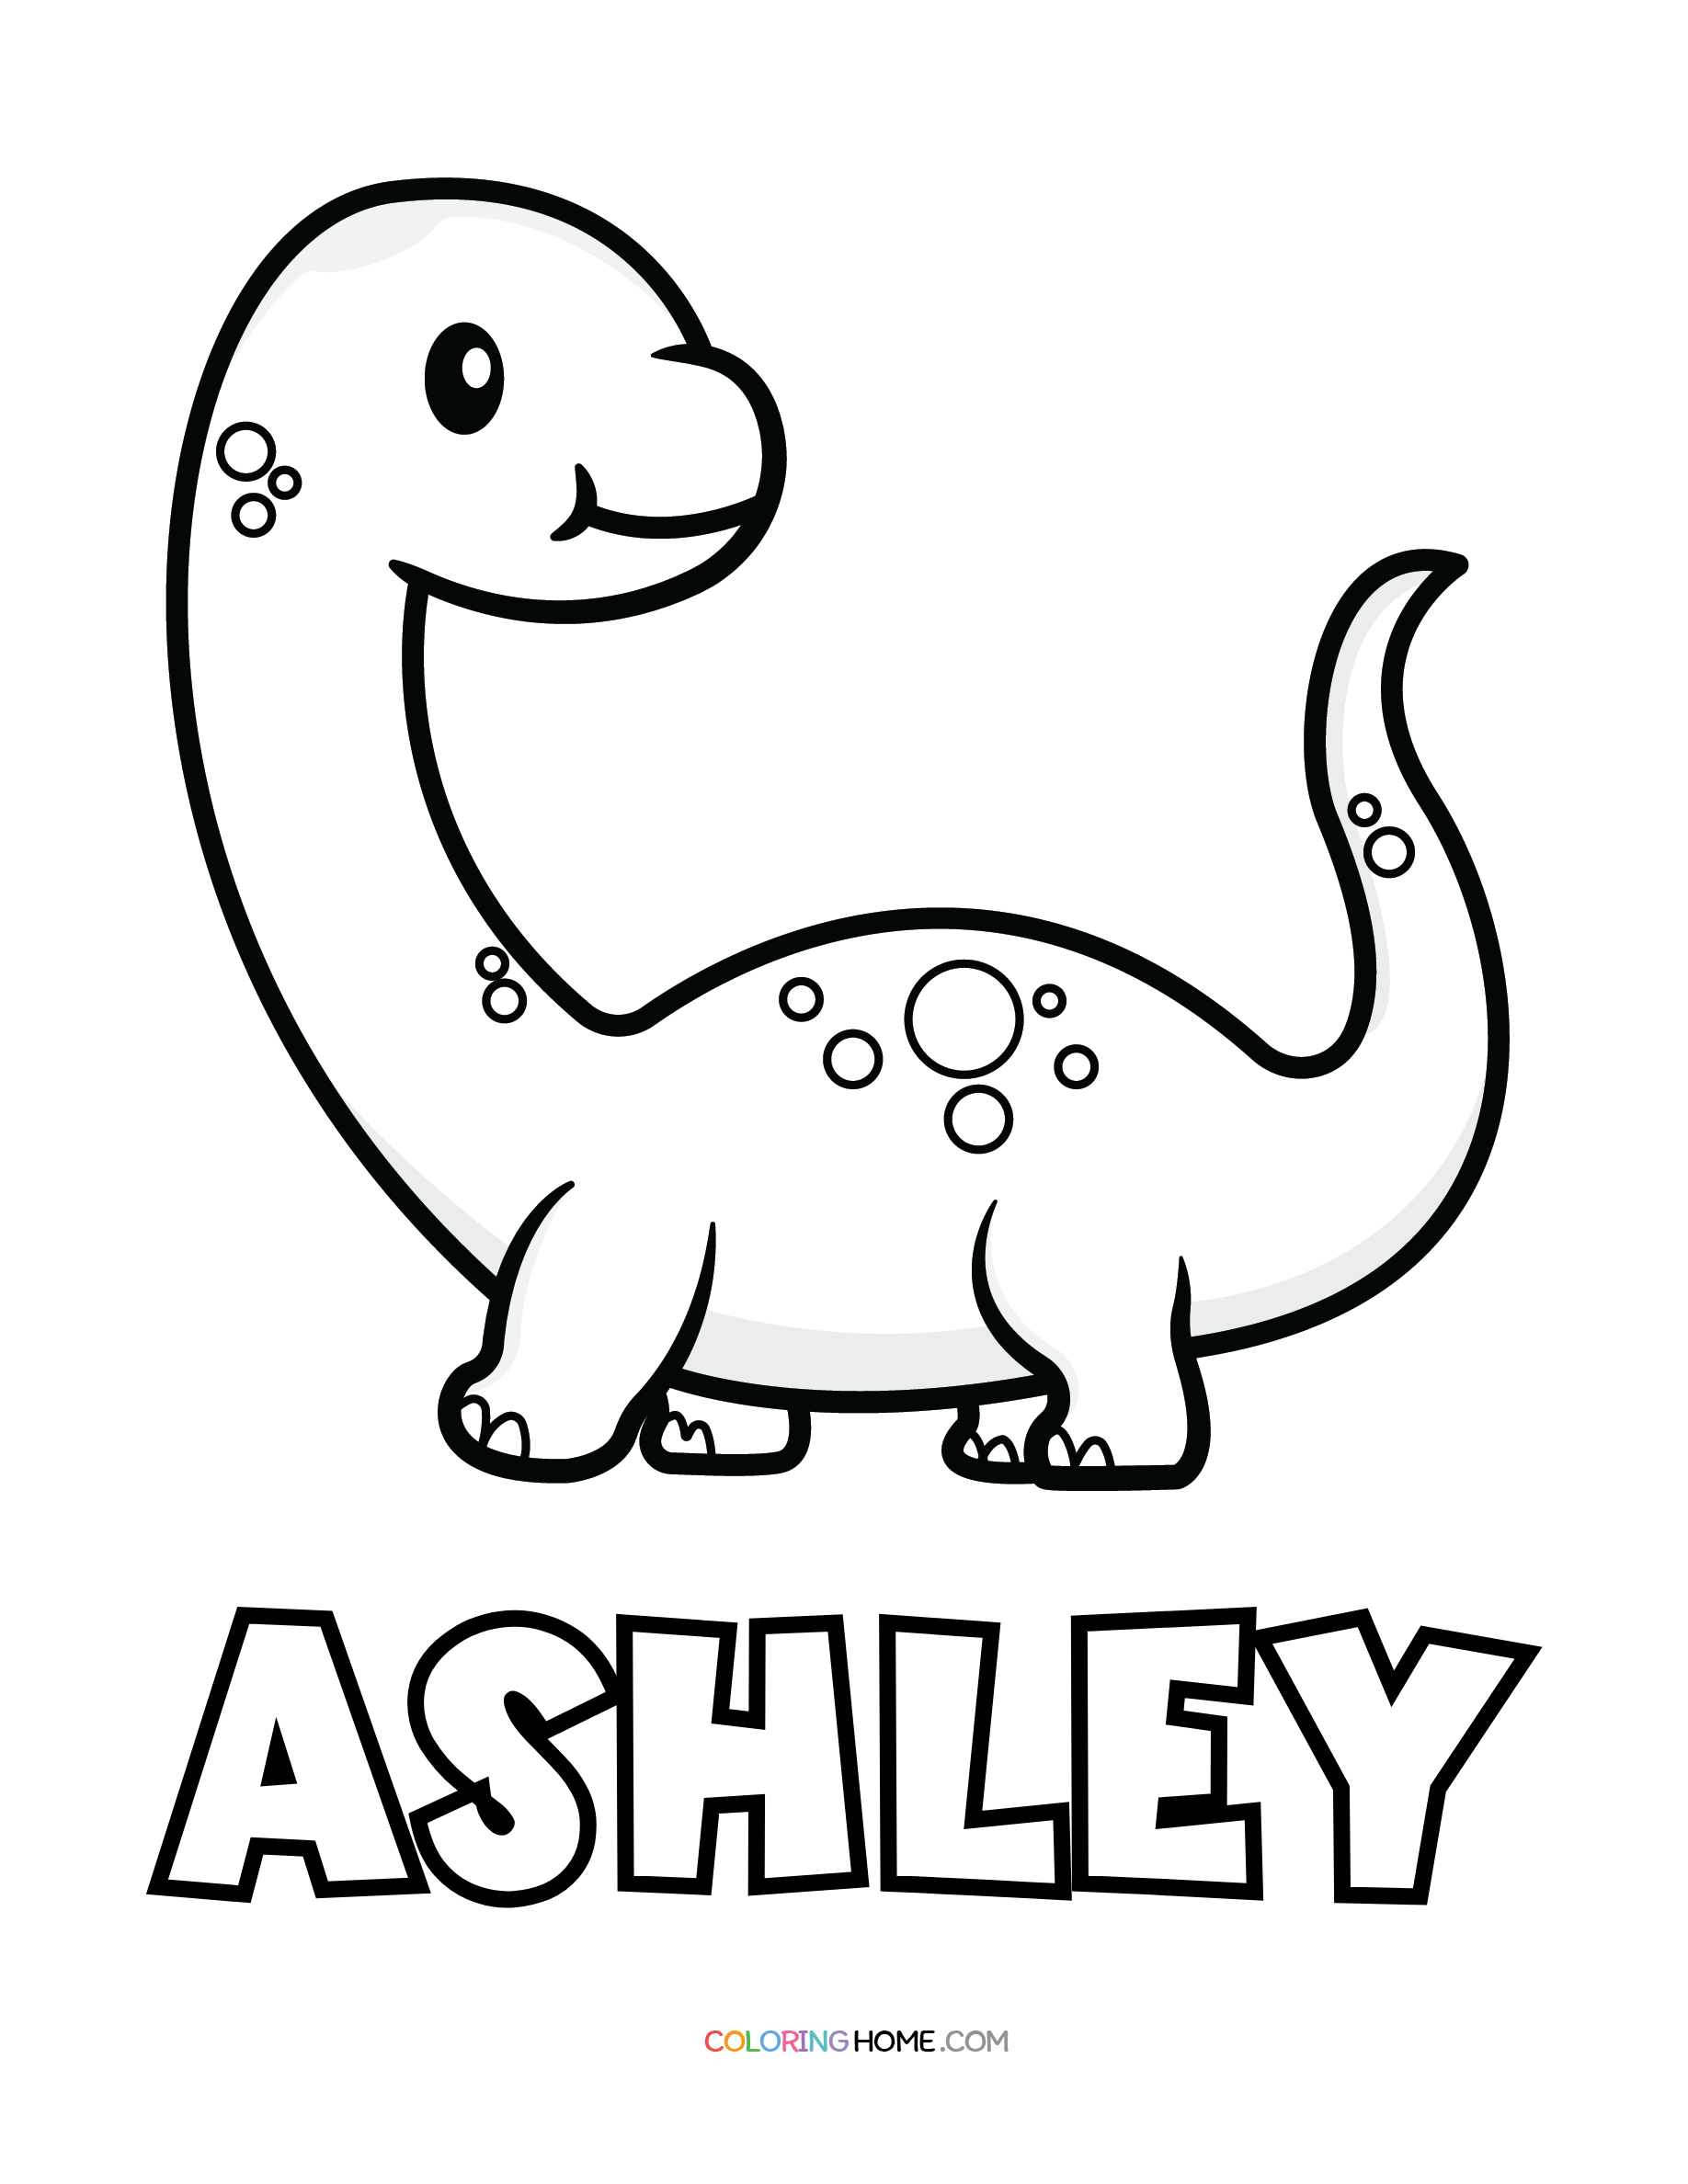 Ashley dinosaur coloring page